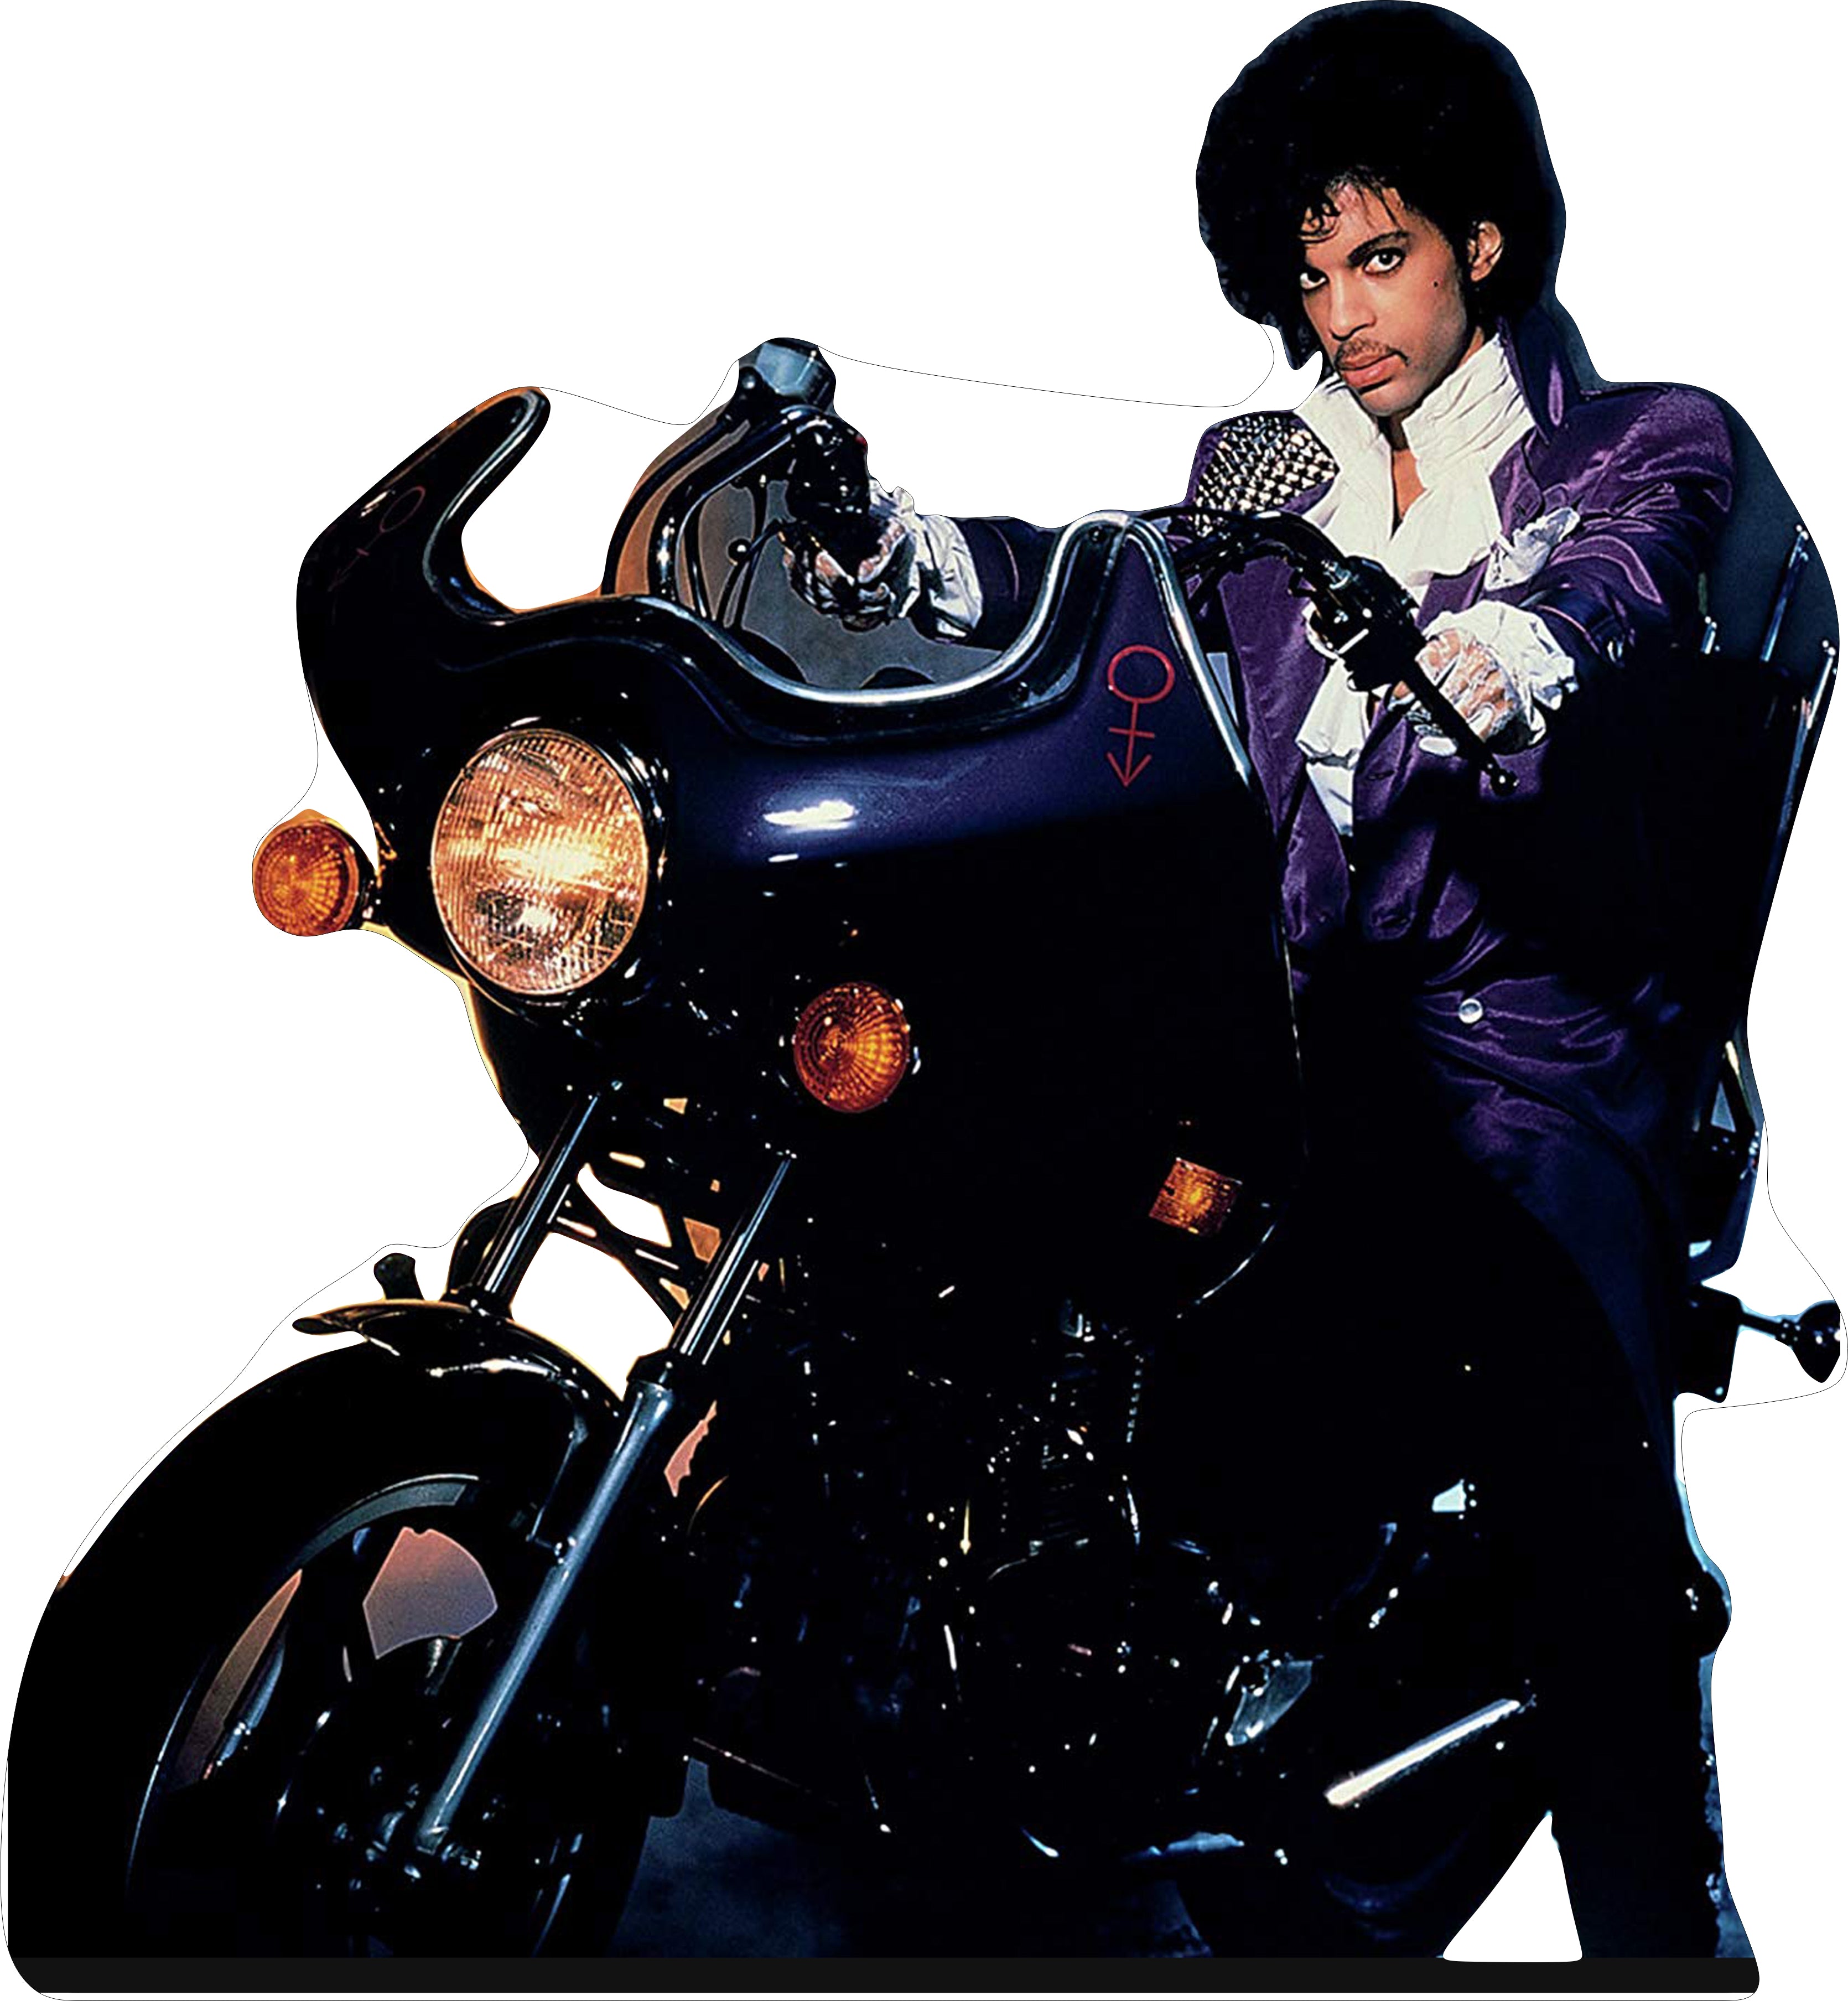 prince purple motorcycle